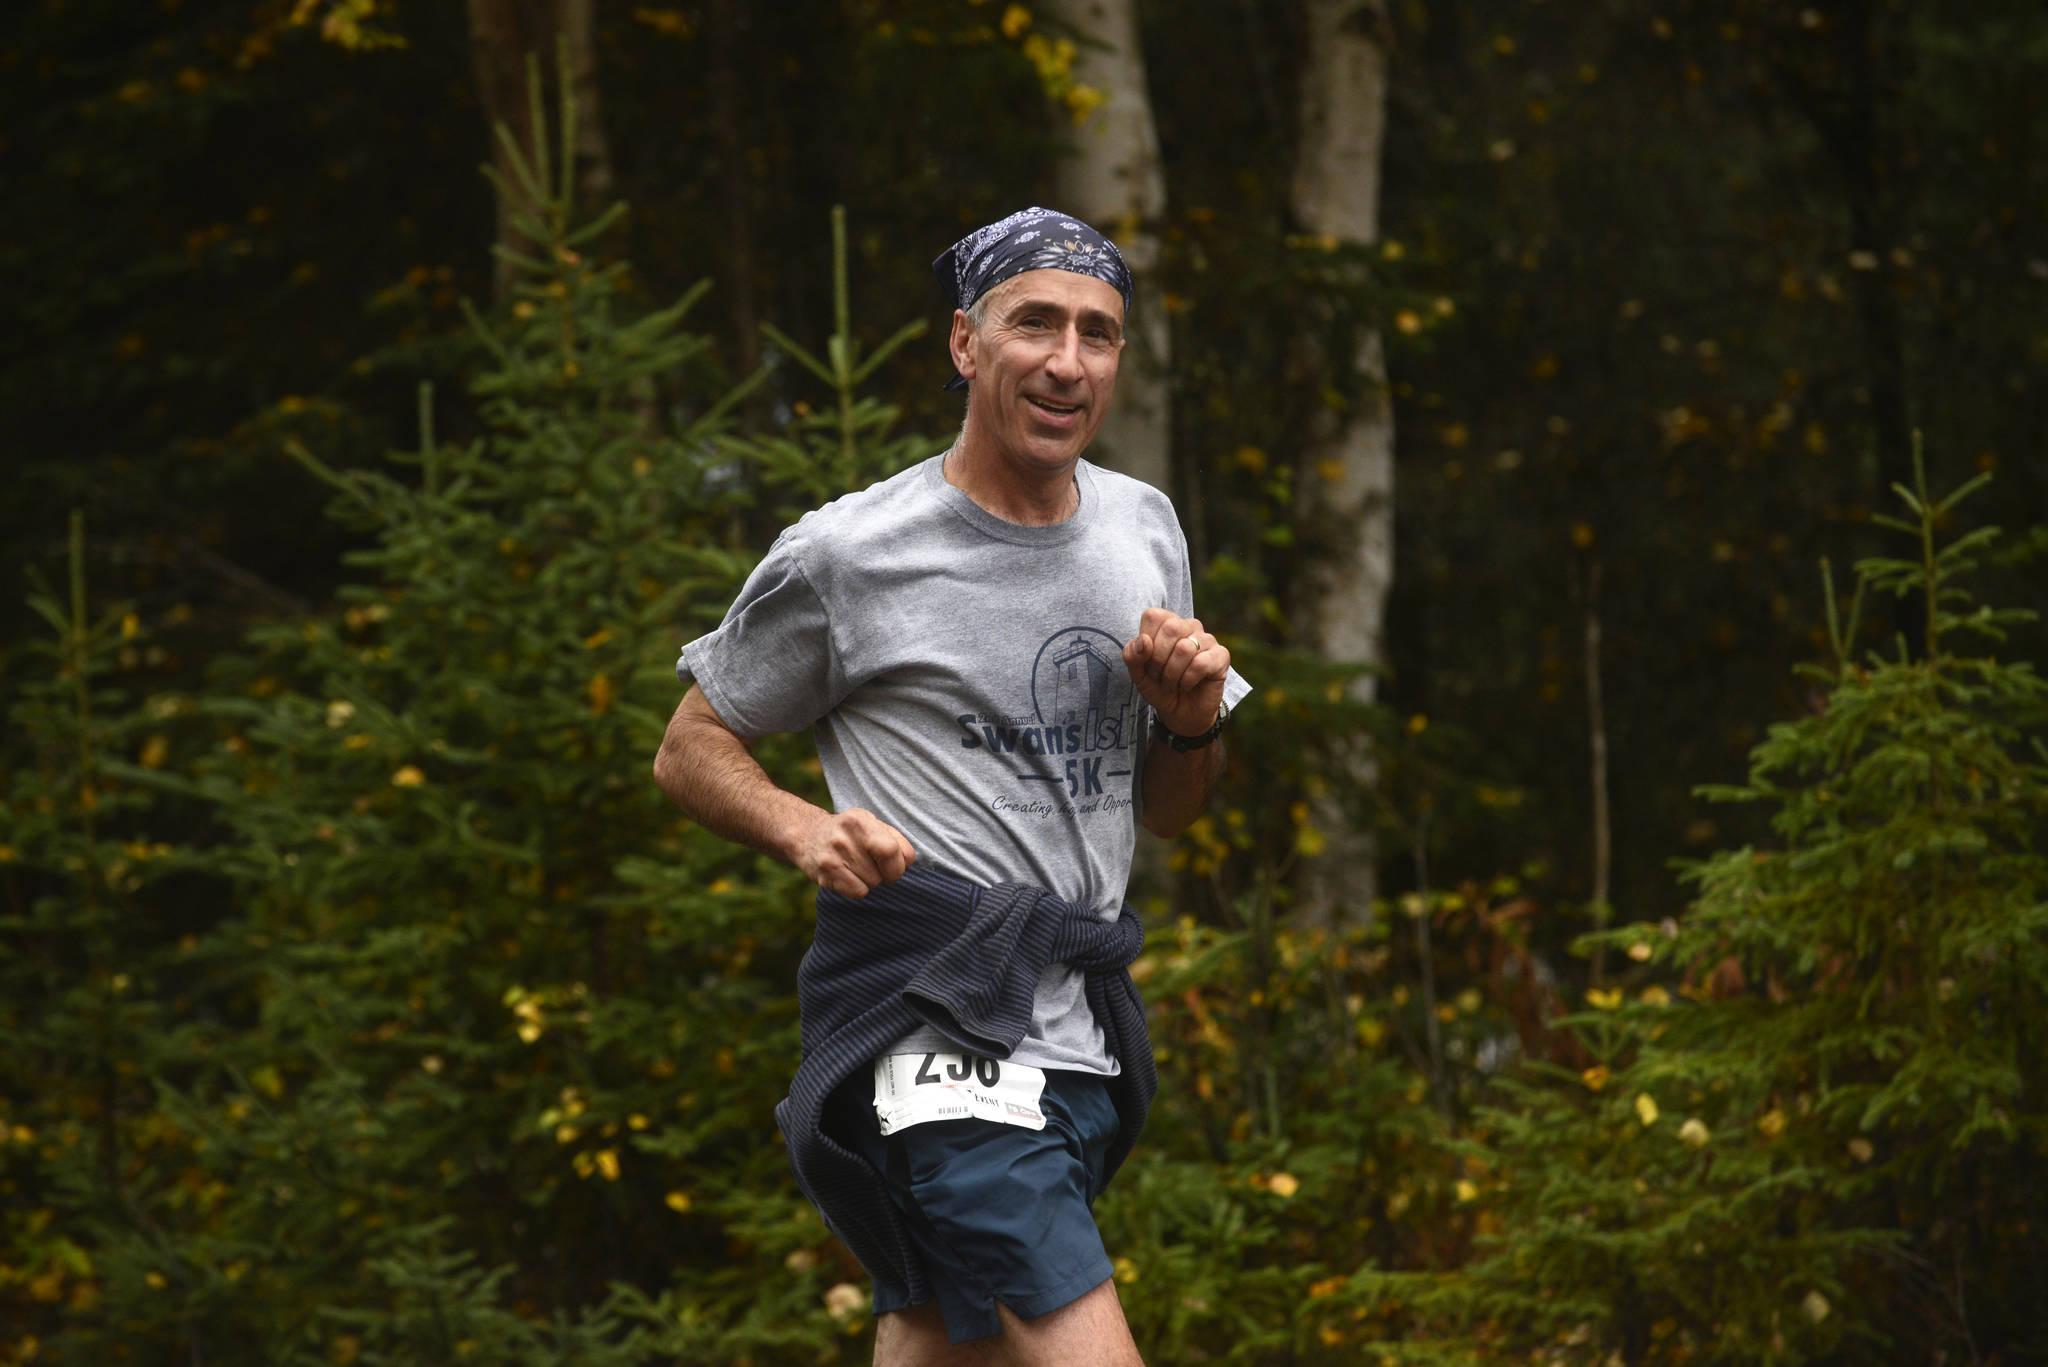 Victor Samoei runs in the Kenai River half-marathon on Sunday, Sept. 24, 2017 near Kenai, Alaska. (Photo by Ben Boettger/Peninsula Clarion)